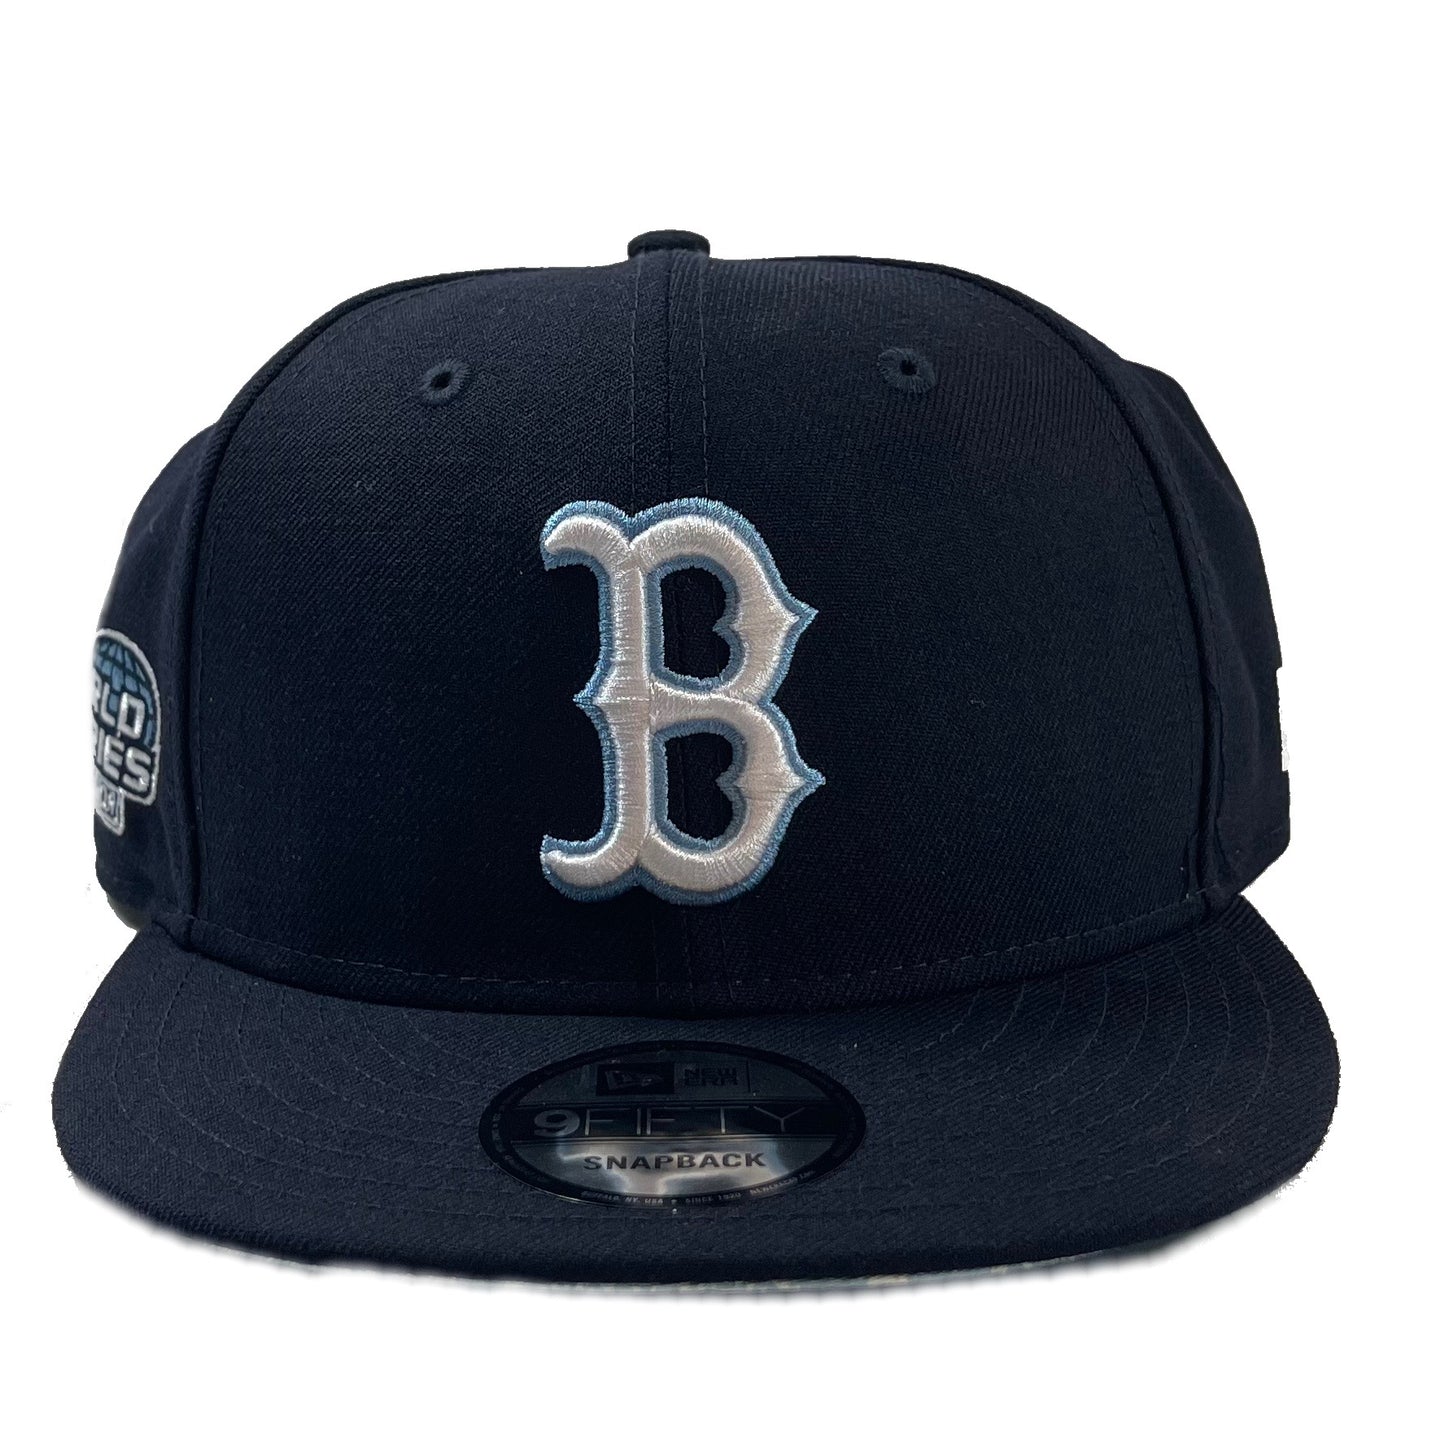 Boston Red Sox New Era B-Dub 59FIFTY Fitted Hat - Black